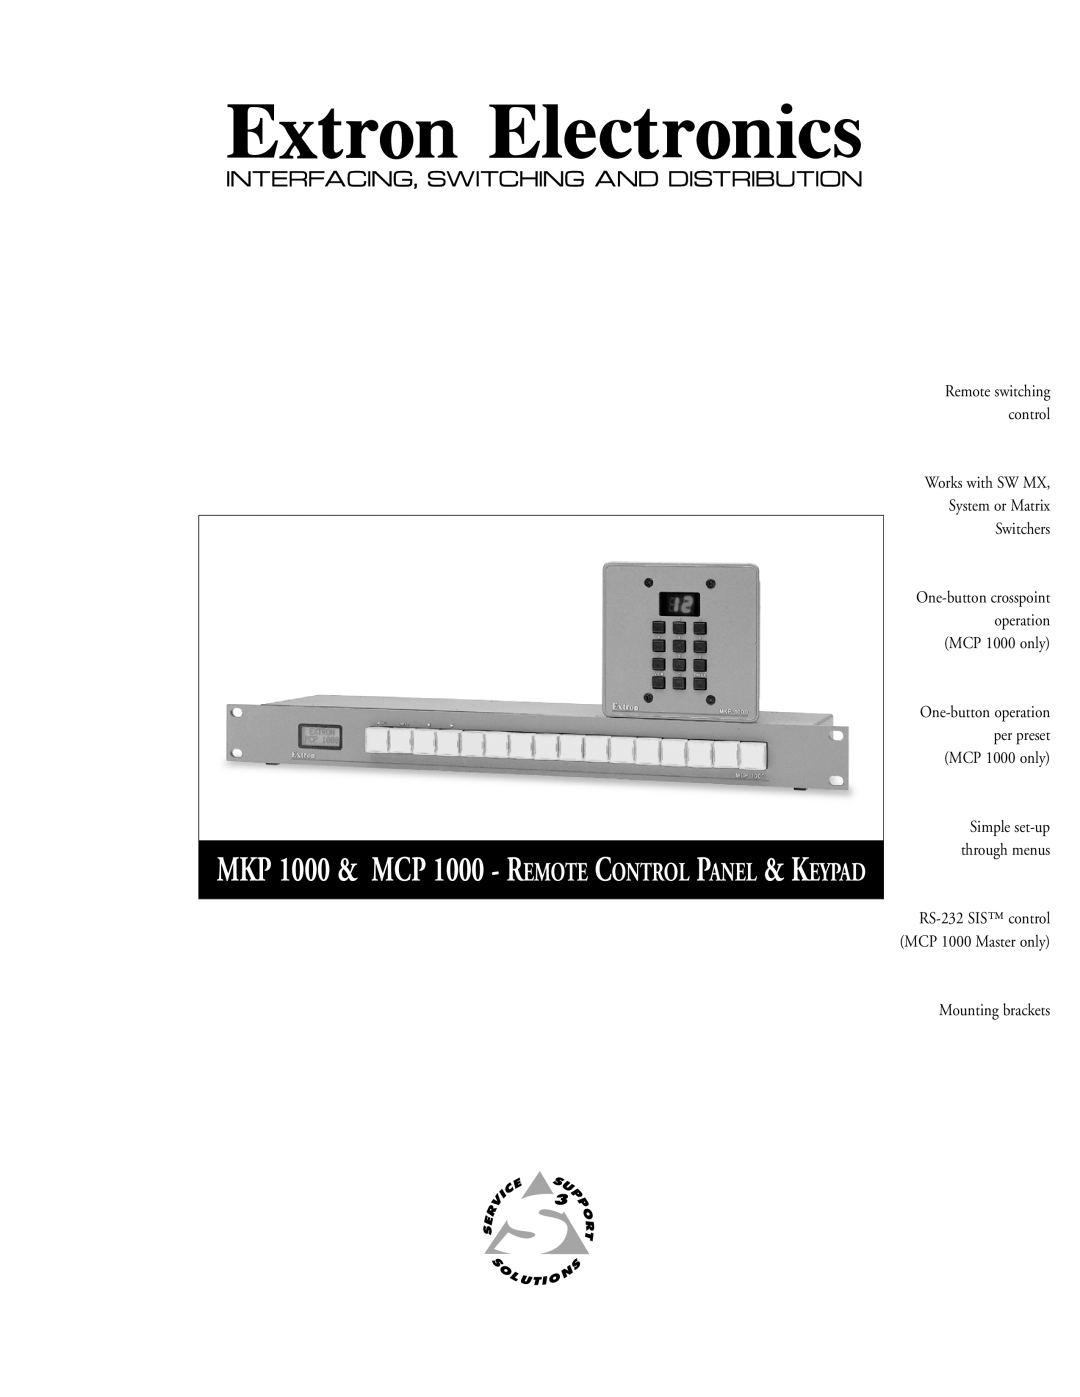 Extron electronic MCP 1000 user manual User’s Manual, Remote Control Panel, 68-456-01 Rev. C, Beeldschermweg 6C 